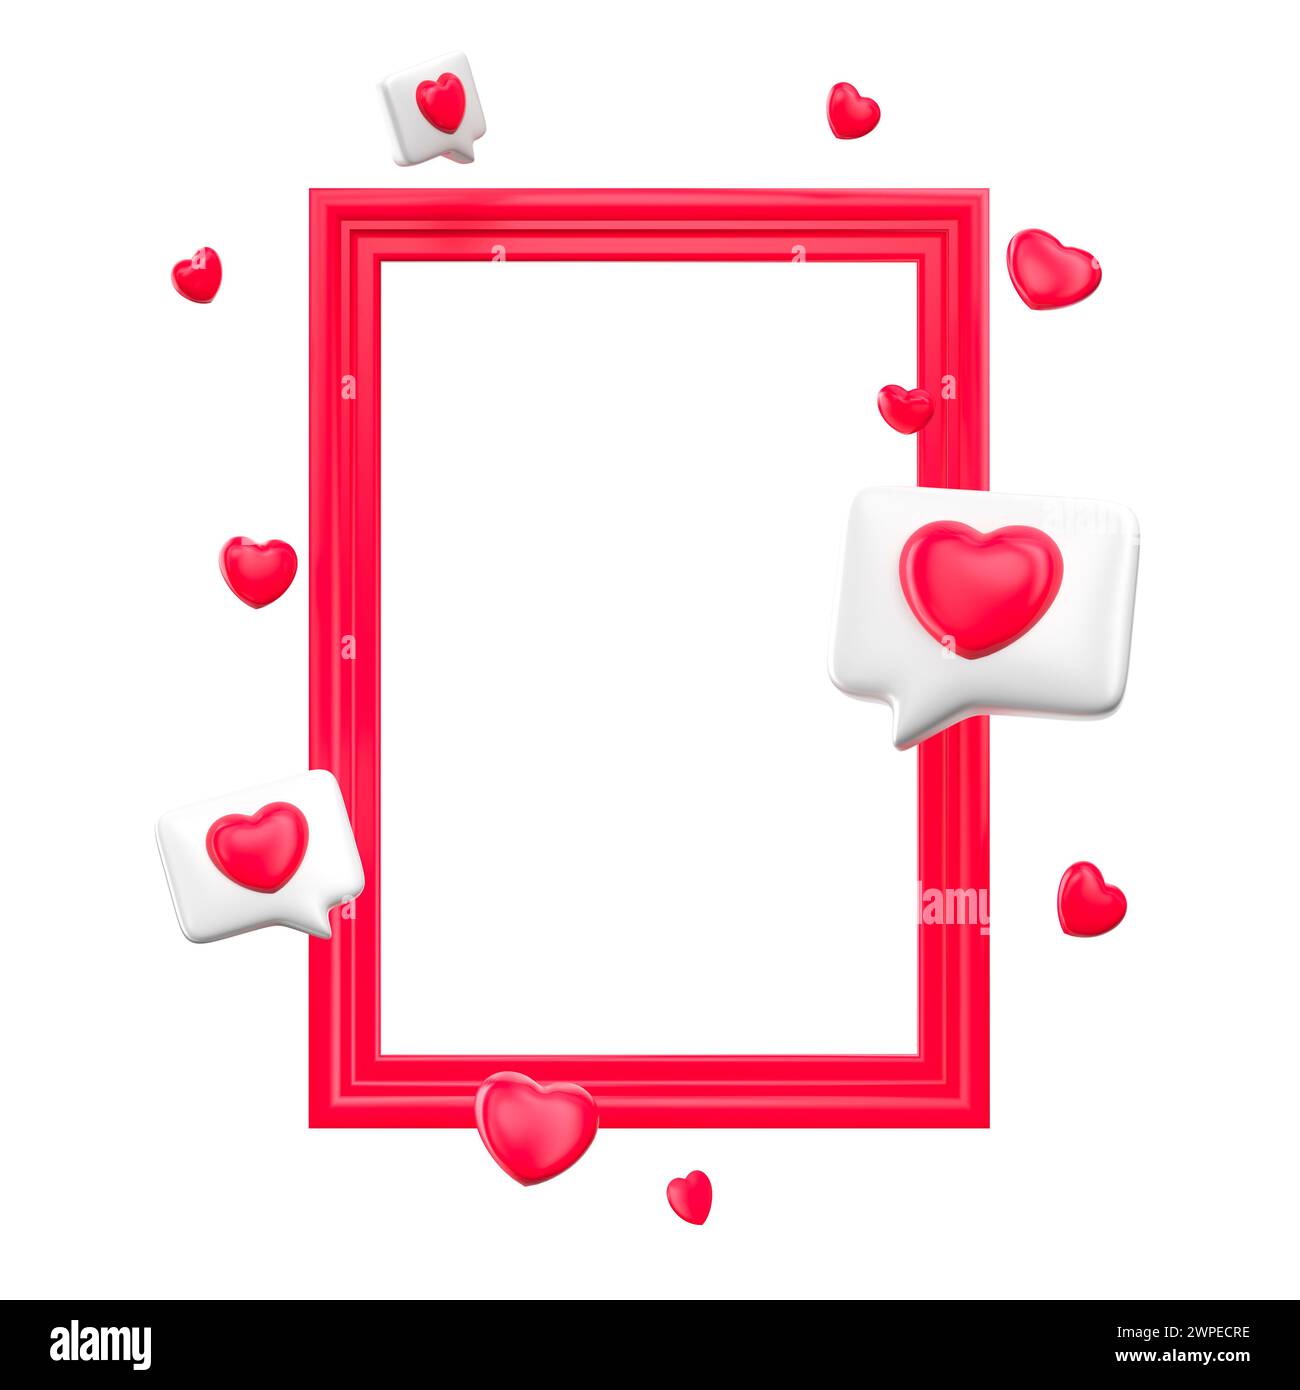 Roter Rahmen mit isolierten Herzformen. Like- oder Love-Konzept-Mockup. 3D-Rendering Stockfoto